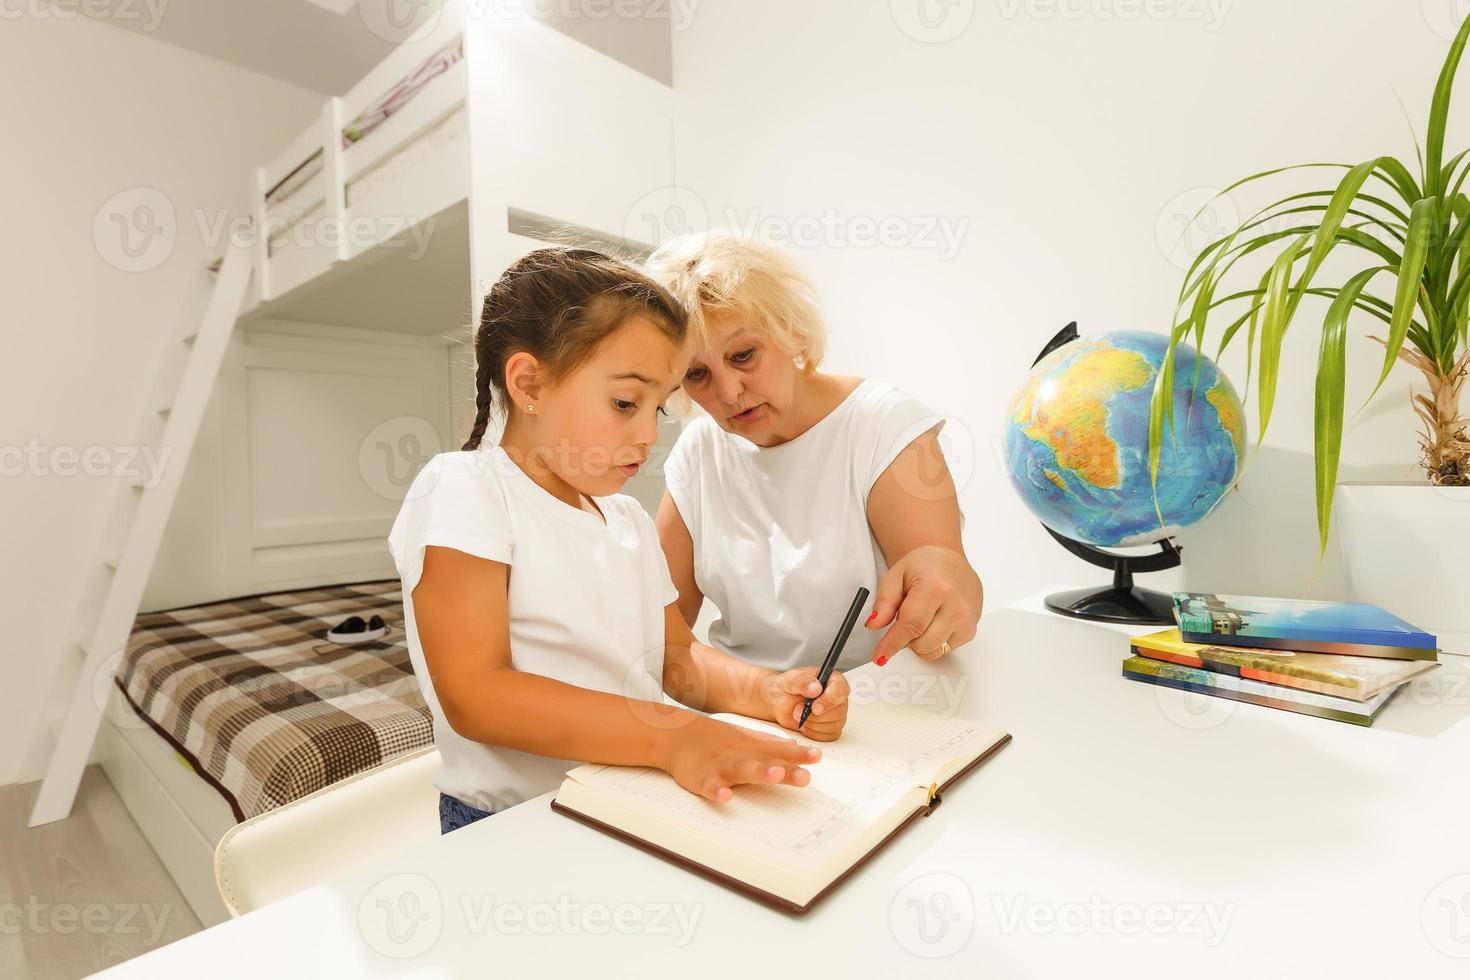 Grandmother help granddaughter doing school homework together at home photo